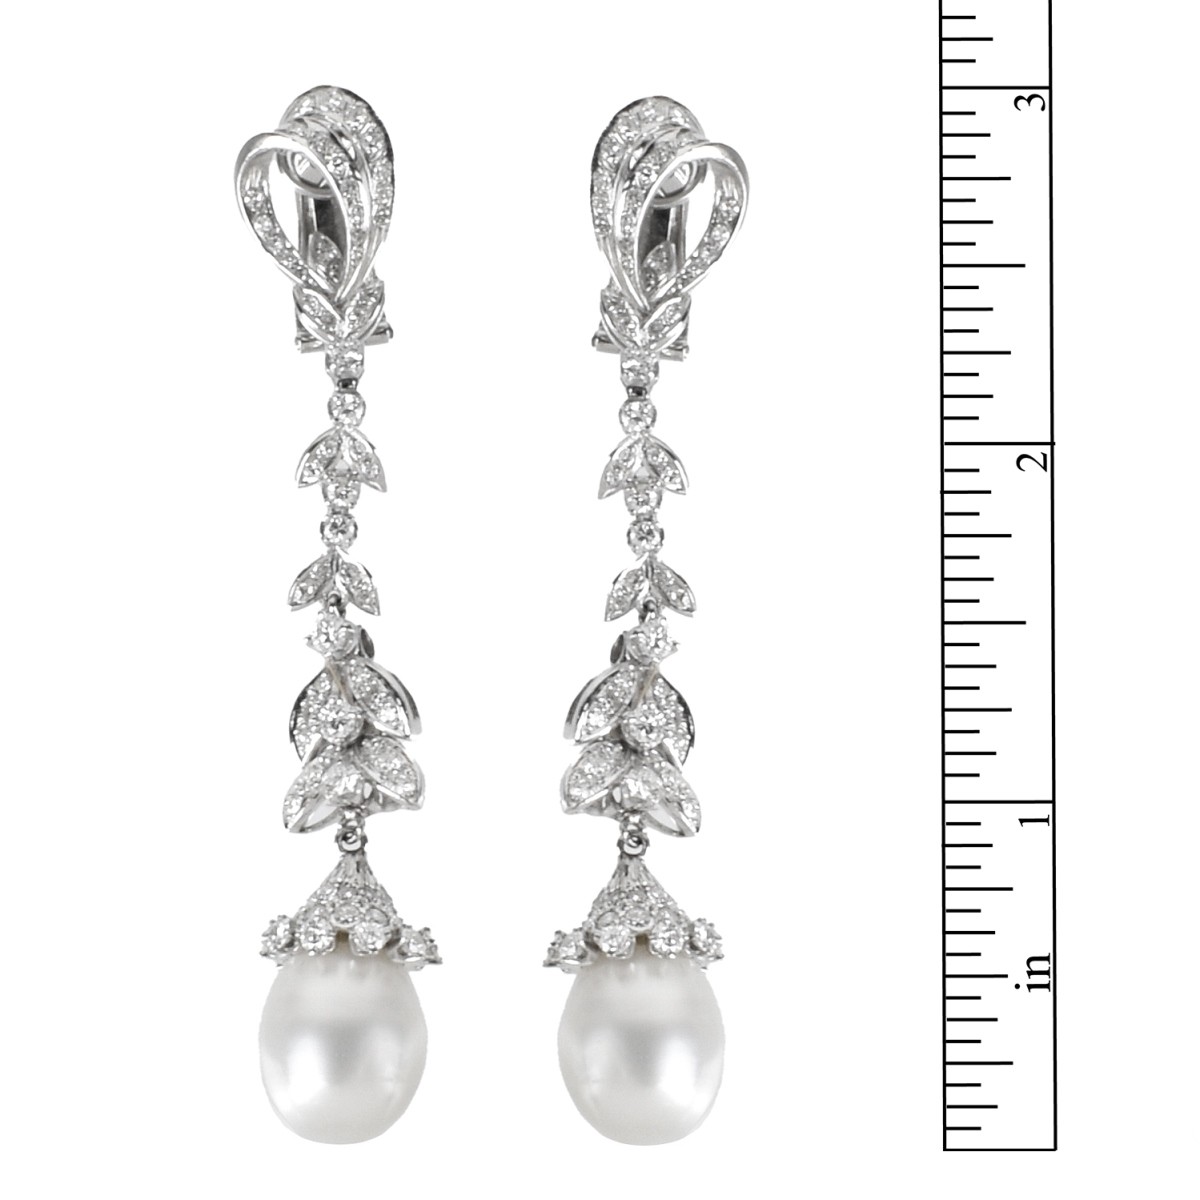 Pearl, Diamond and Platinum Earrings